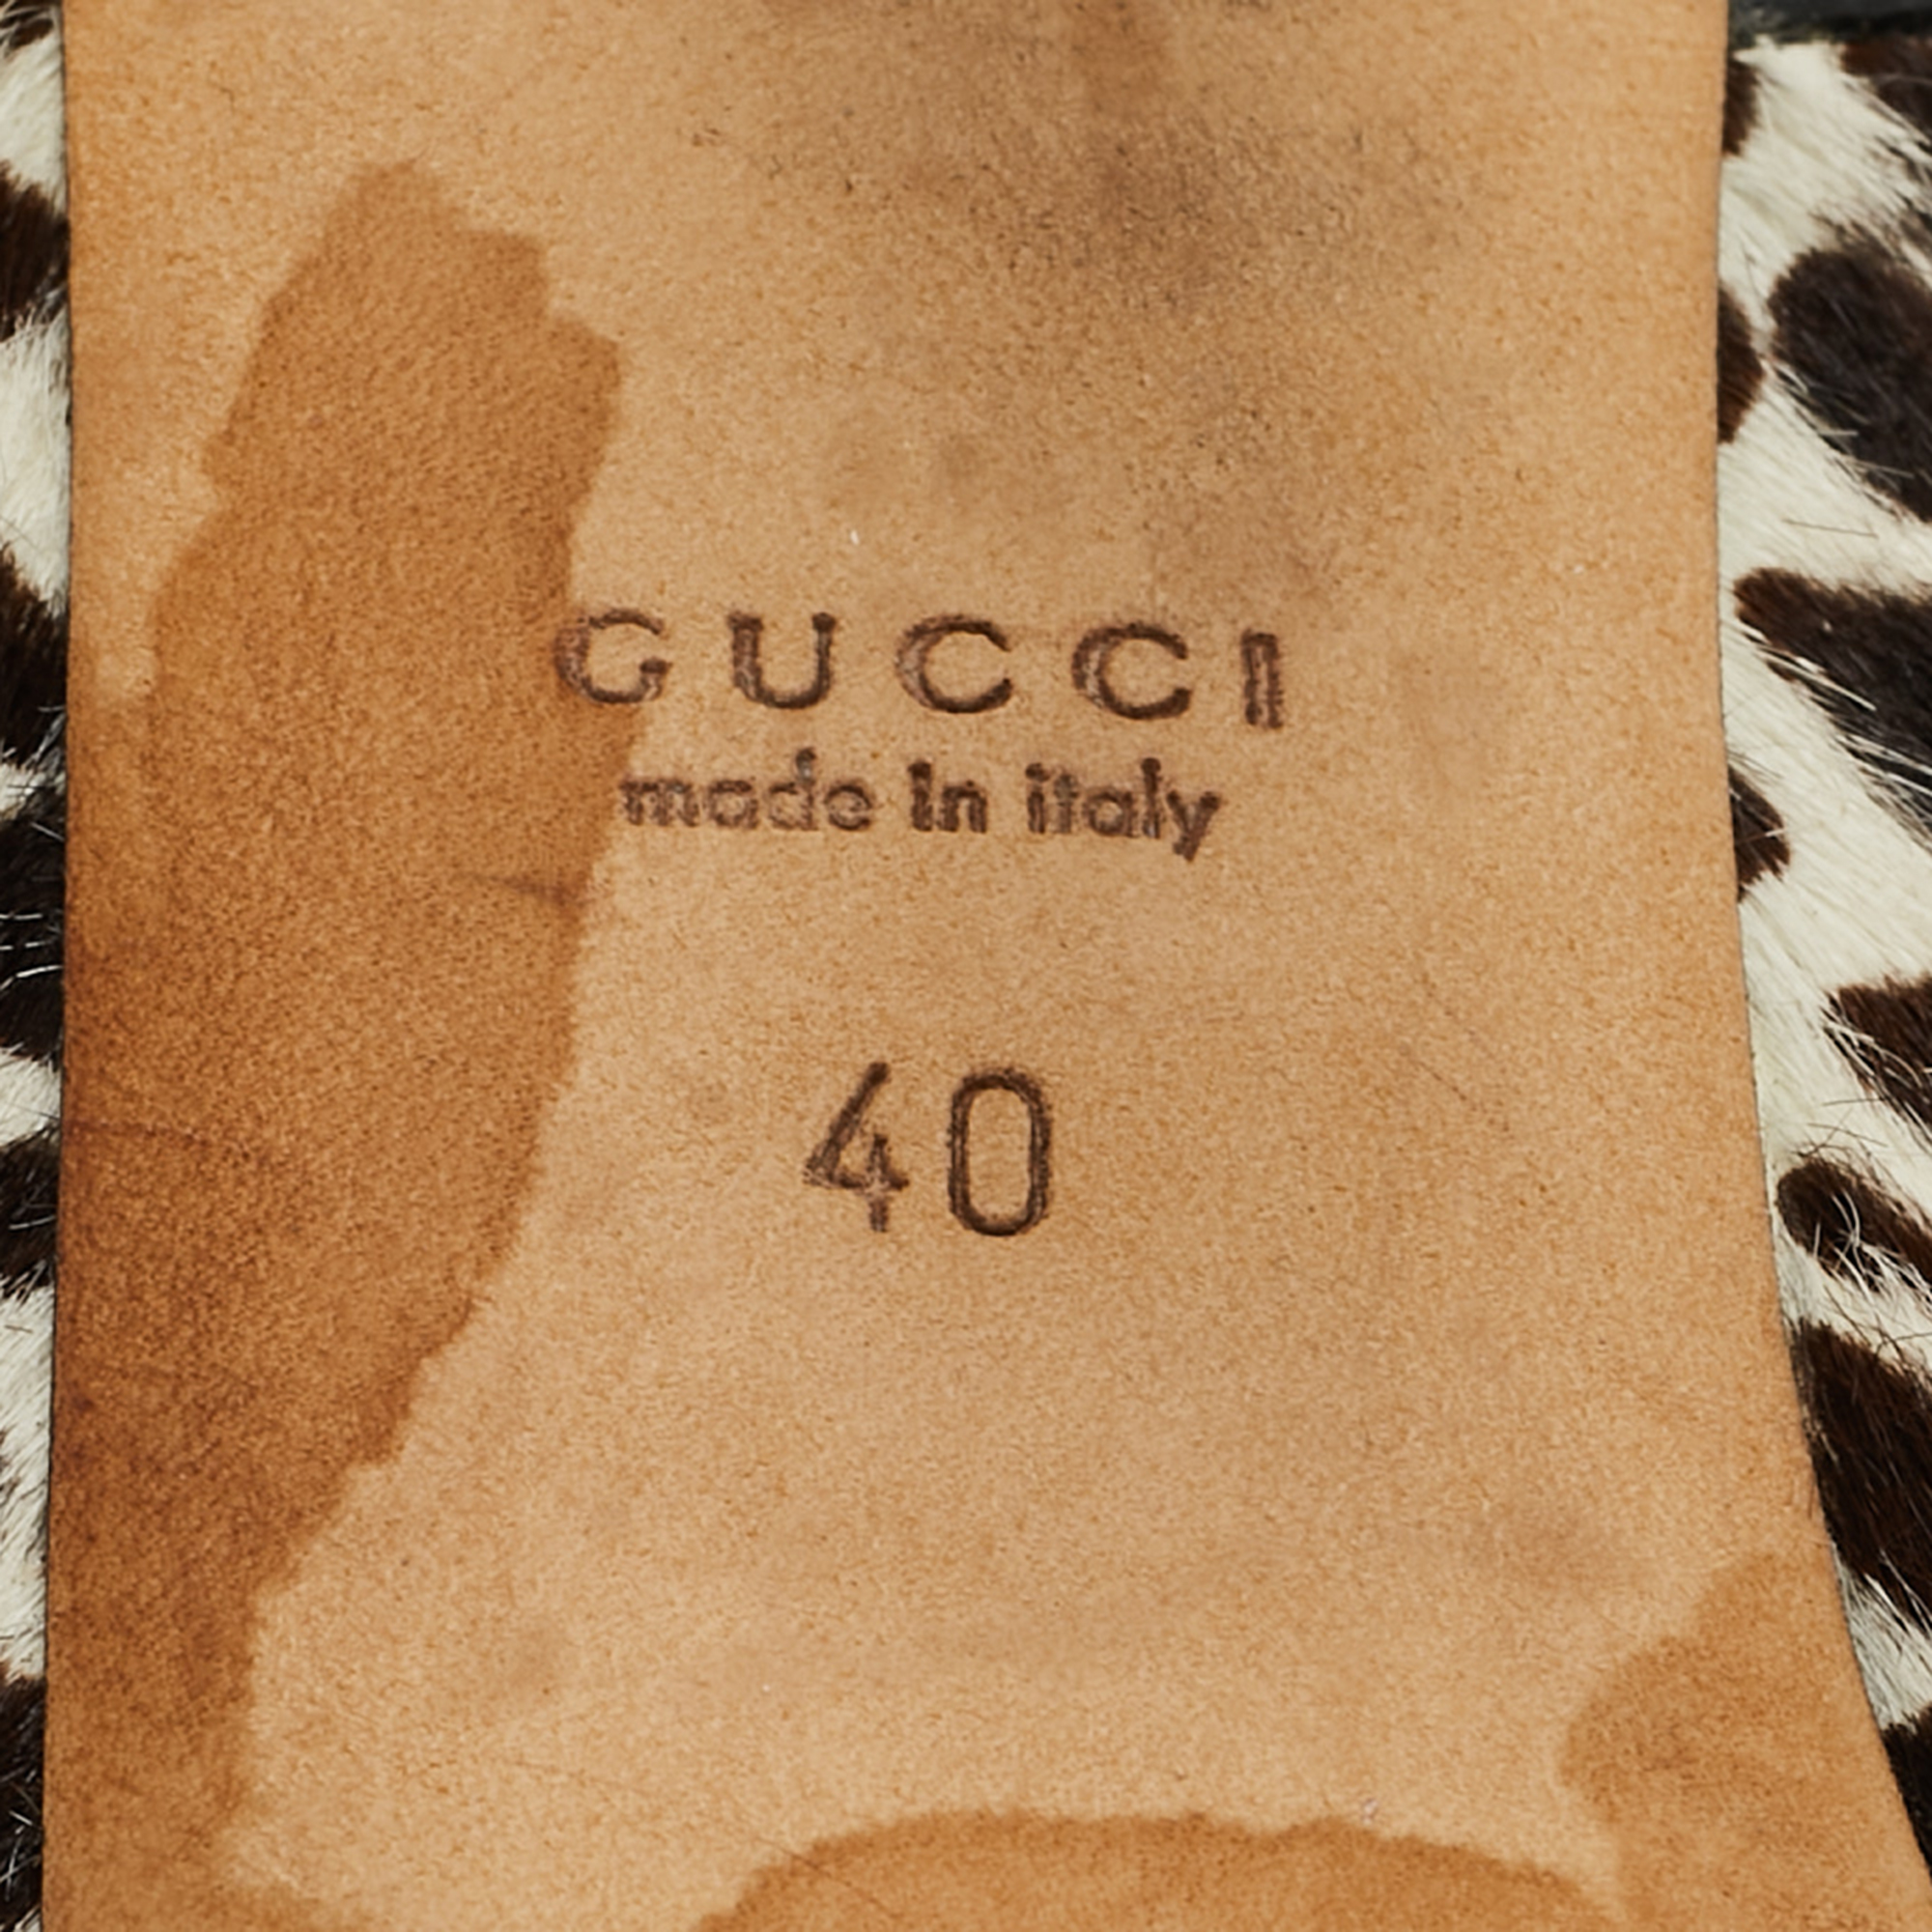 Gucci Brown/White Leopard Print Calf Hair Sofia Platform Slingback Pumps Size 40